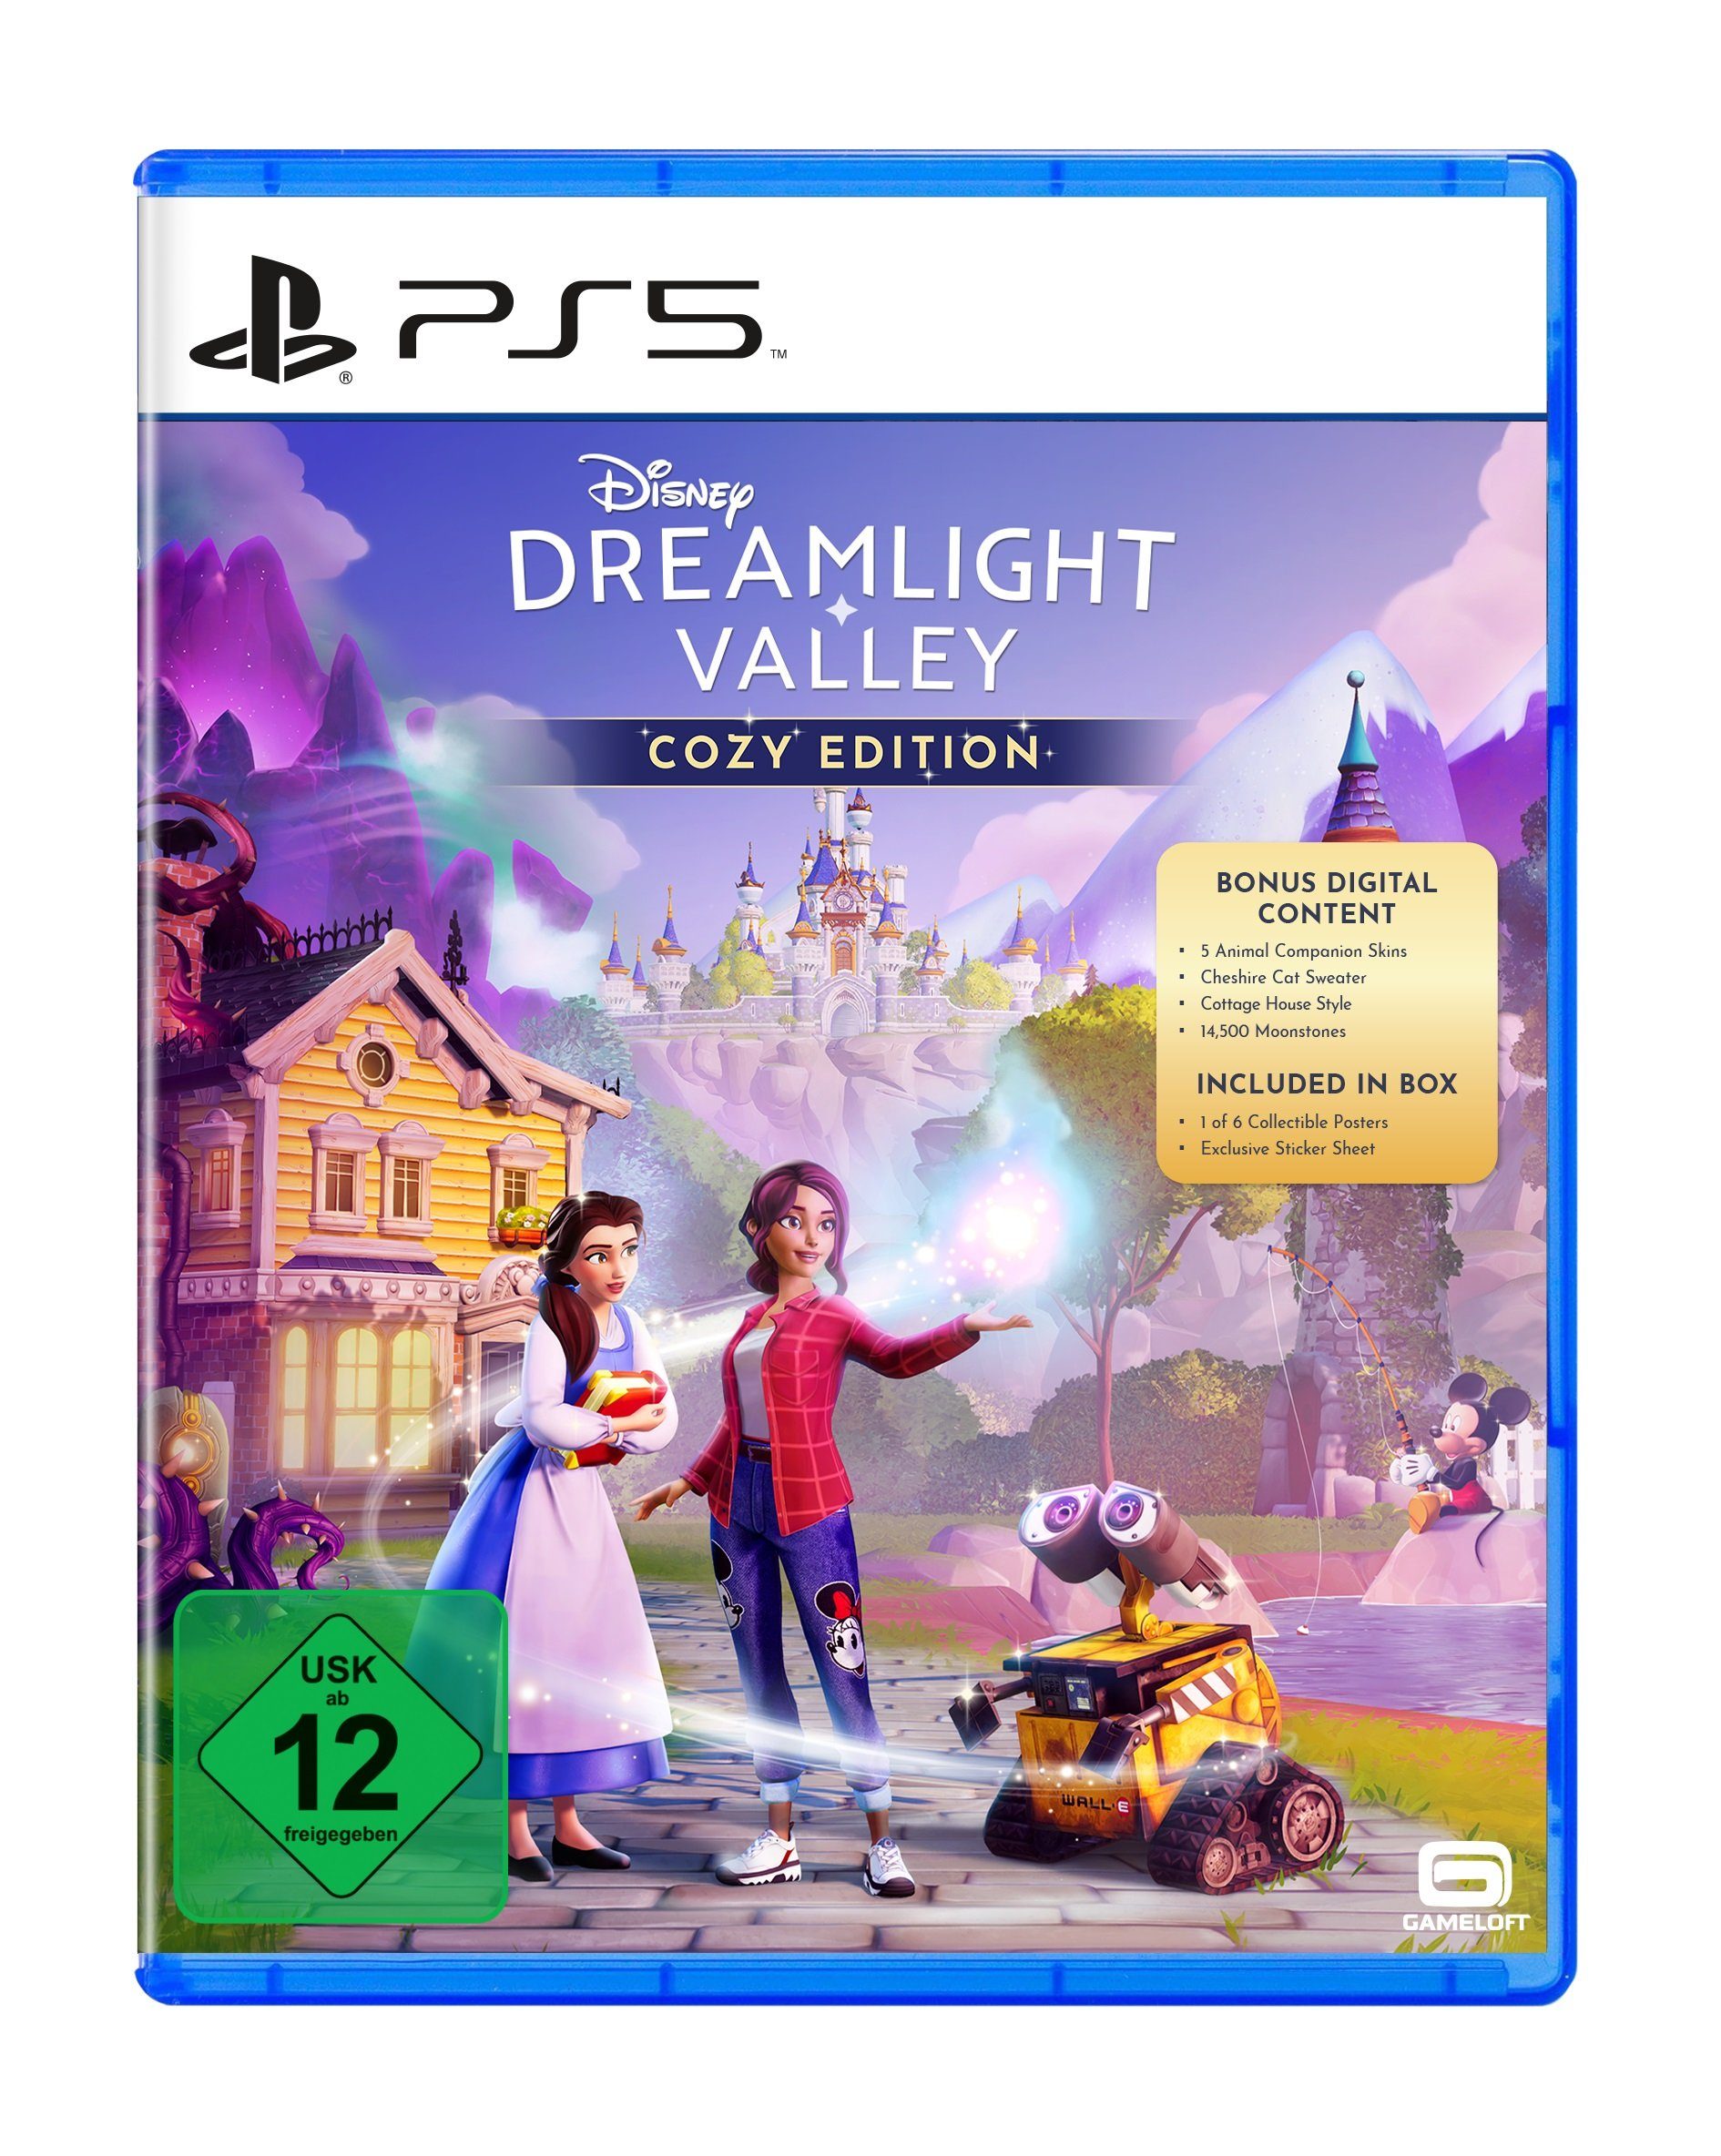 Nighthawk Disney 5 Dreamlight PlayStation Edition Cozy Valley